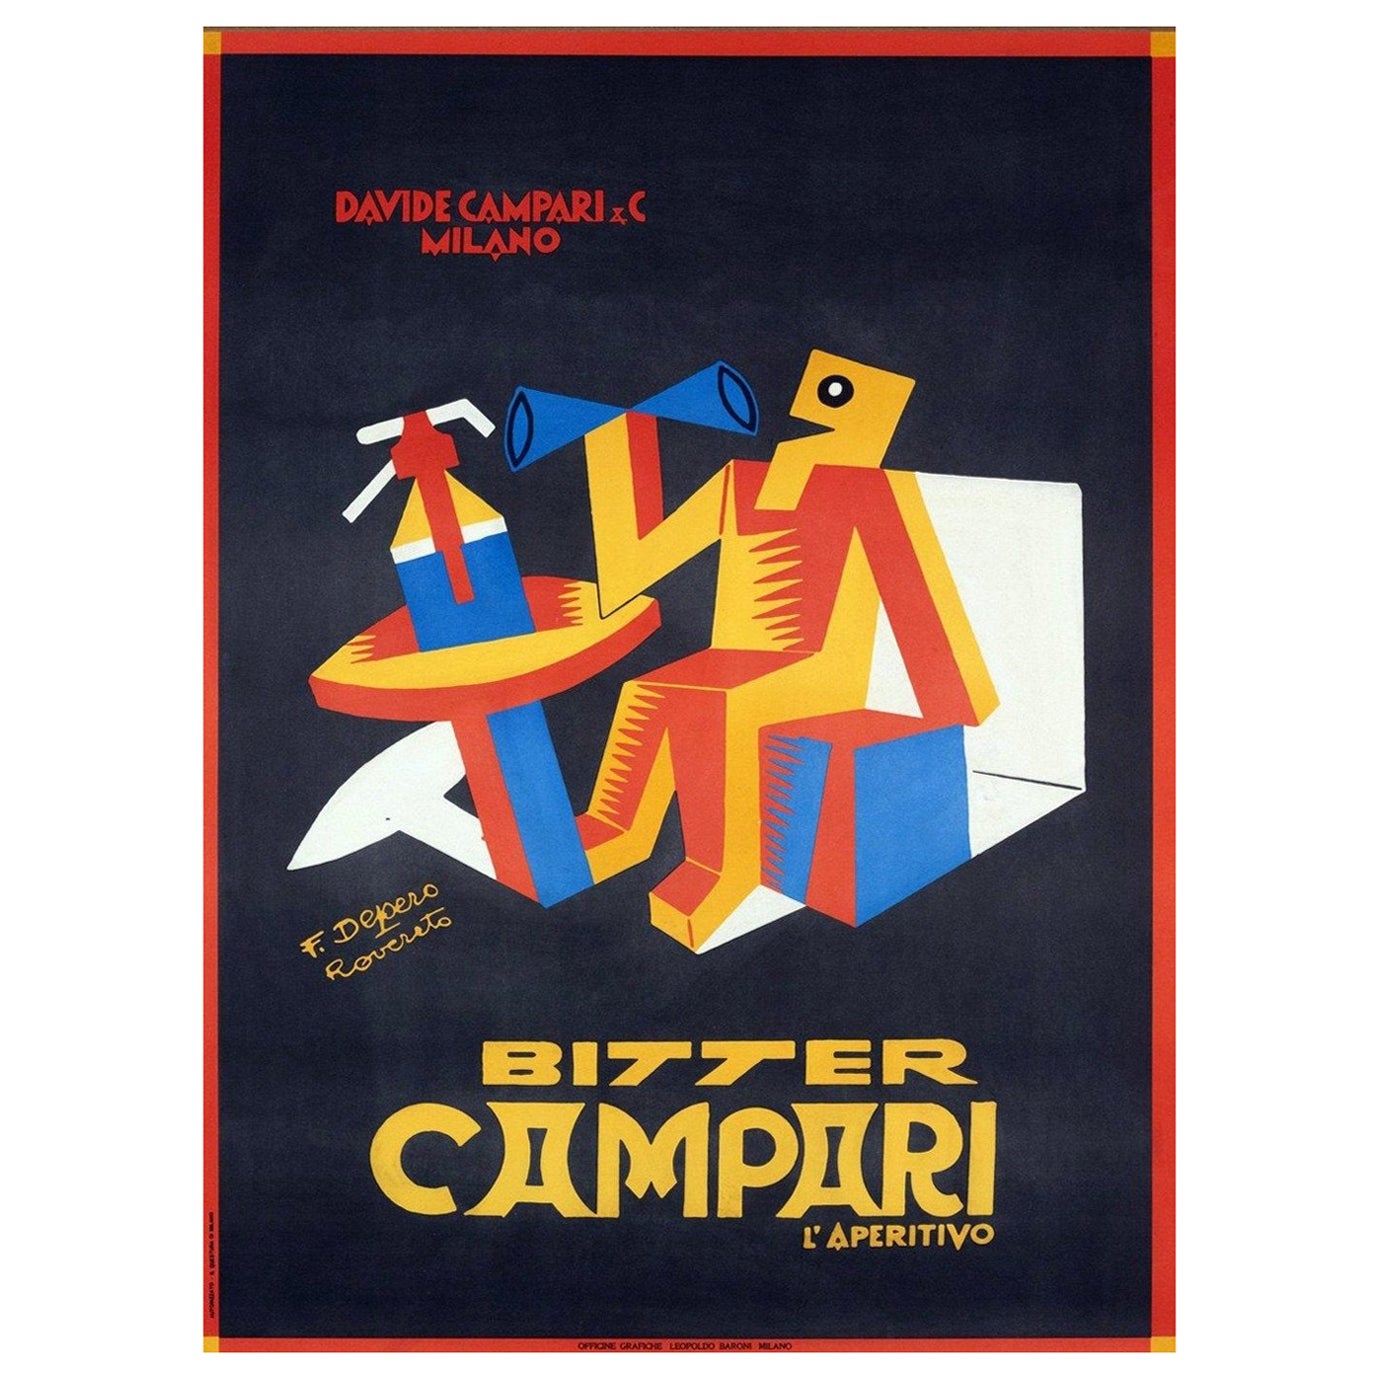 1955 Campari, Fortunato Depero Original Vintage Poster